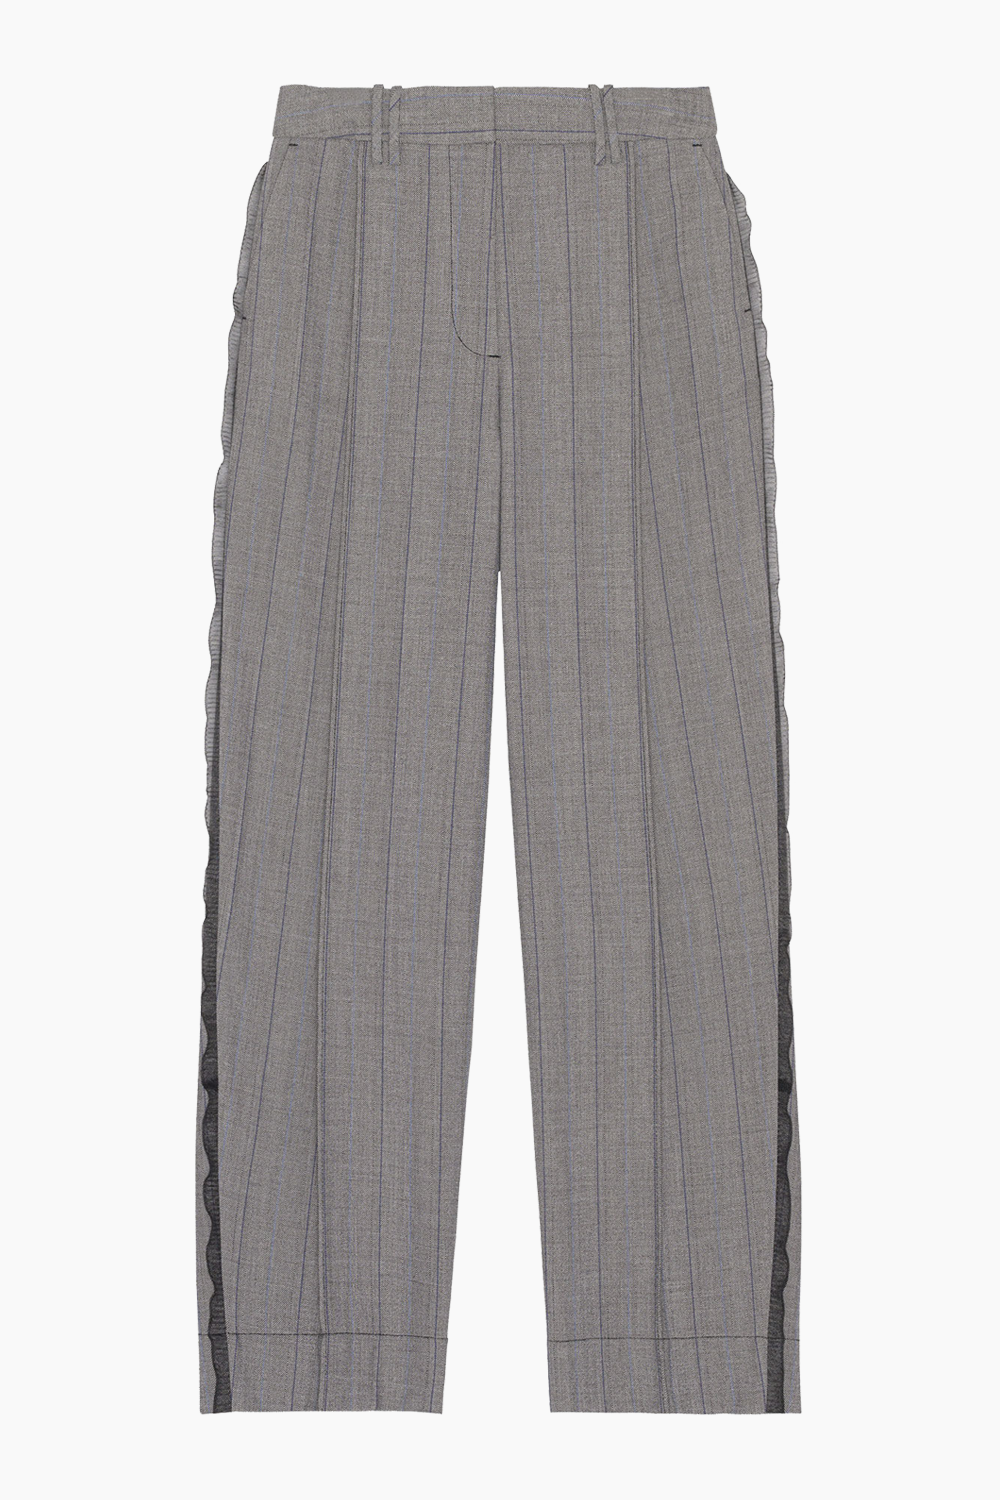 Se Herringbone Suiting Relaxed Pleated Pants F8214 - Frost Grey - GANNI - Grå S hos QNTS.dk